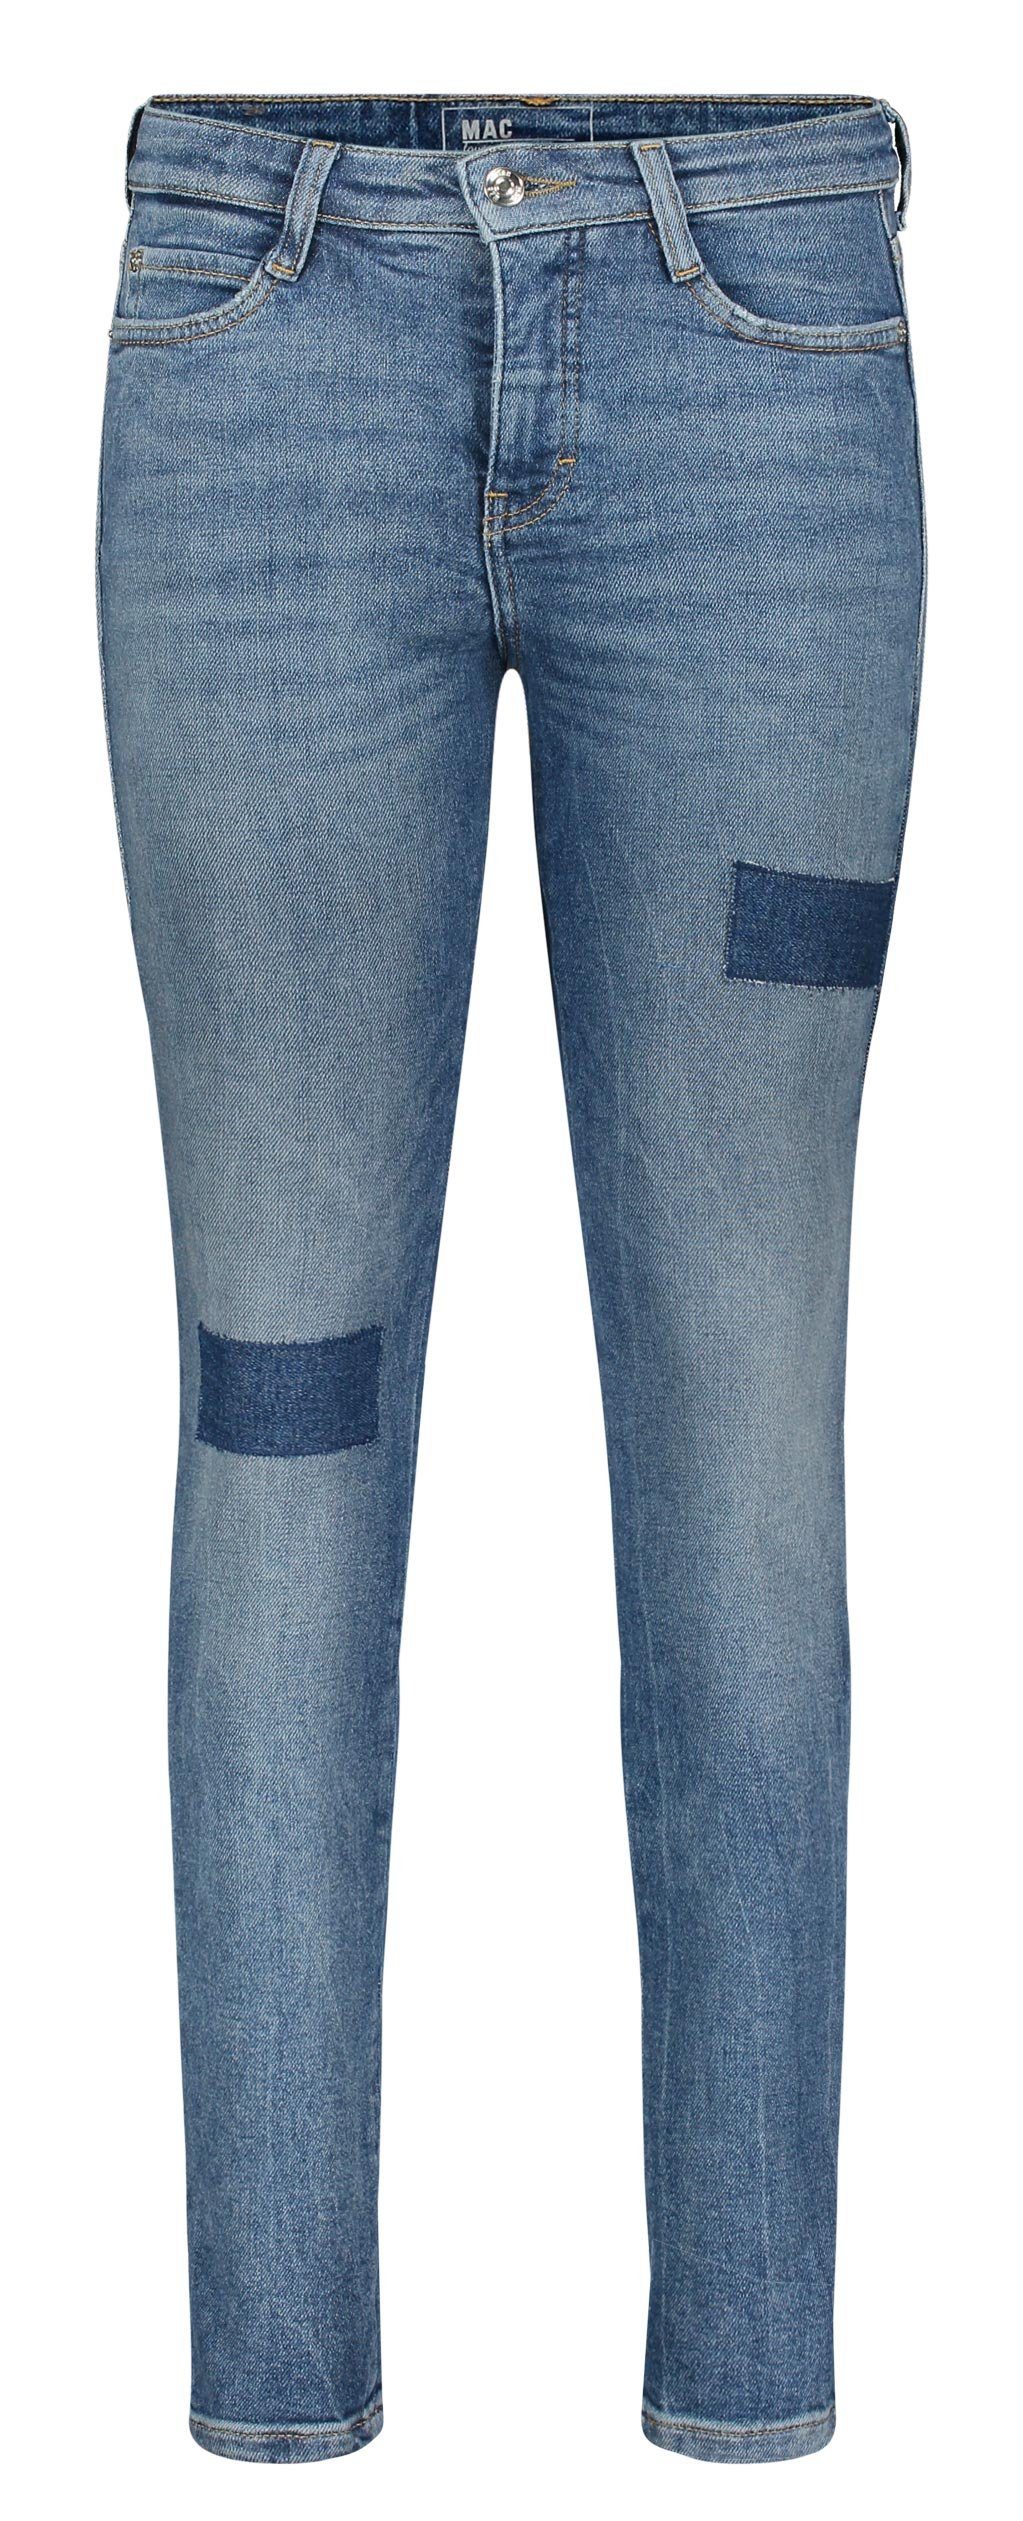 Damen Jeans MAC Stretch-Jeans MAC SKINNY mid blue patched wash 5996-90-0312L